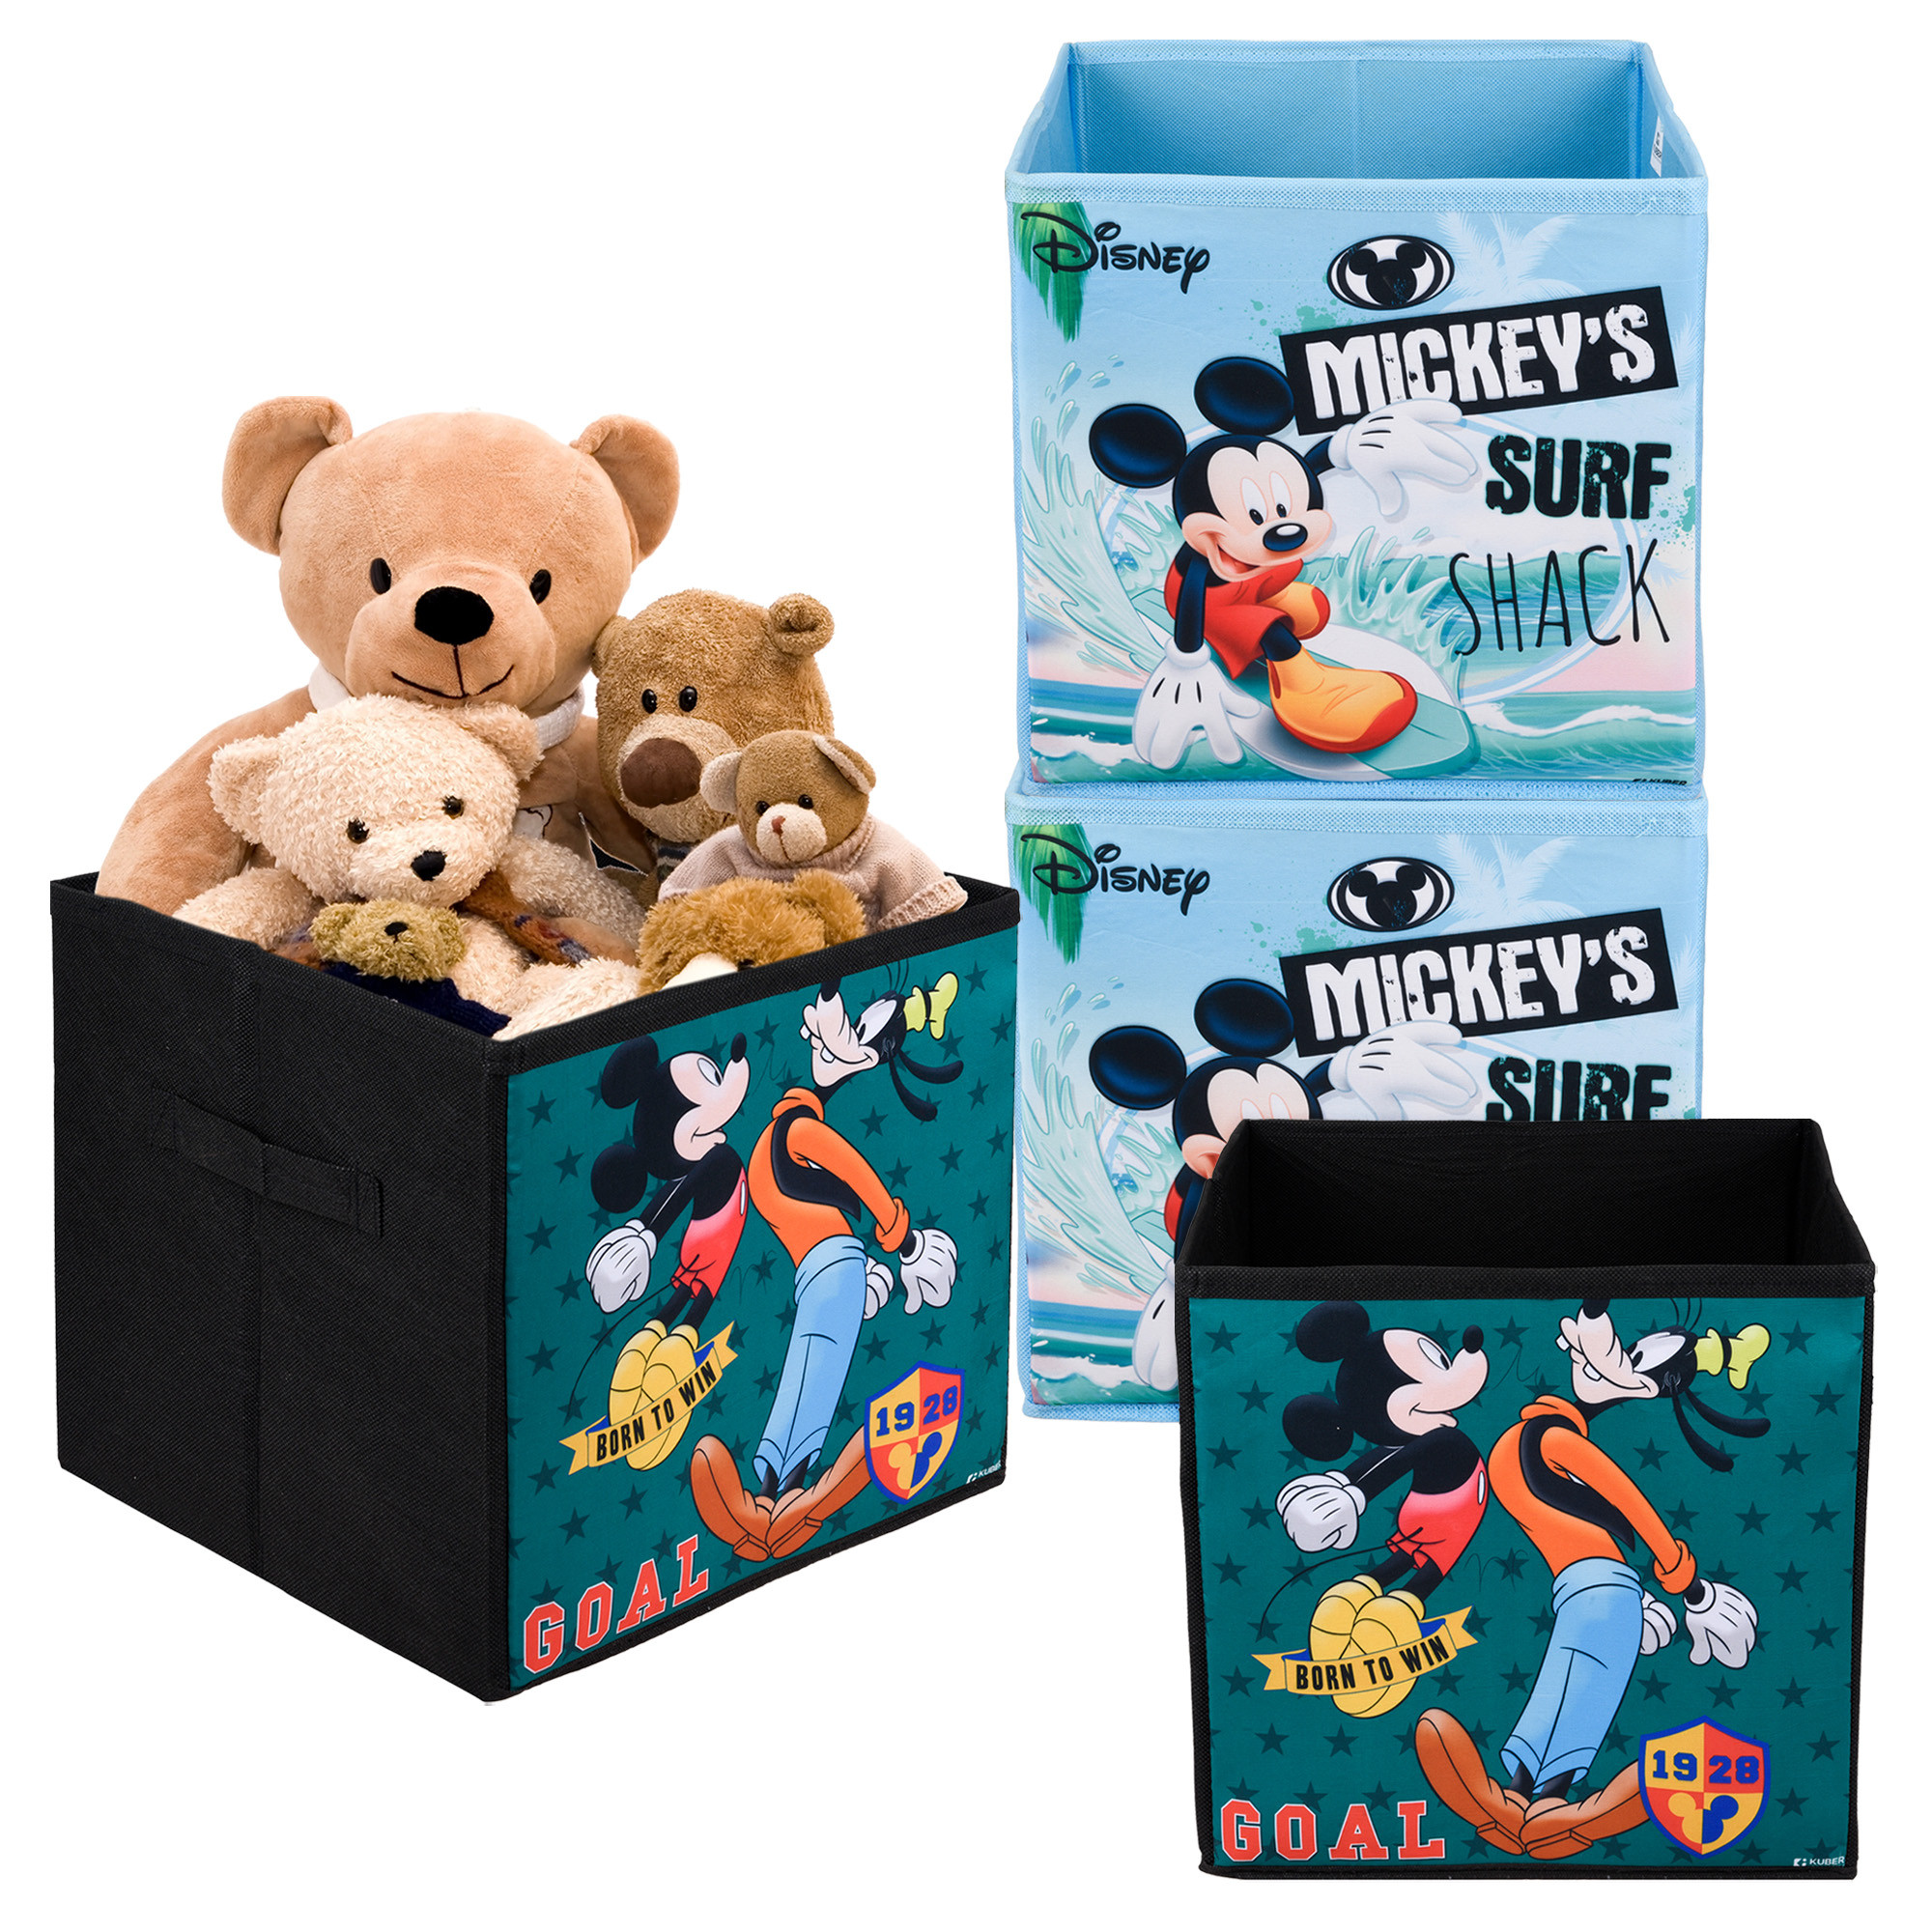 Kuber Industries Storage Box | Square Toy Storage Box | Wardrobe Organizer for Clothes-Books-Toys-Stationary | Drawer Organizer Box with Handle | Disney-Print | Black & Sky Blue